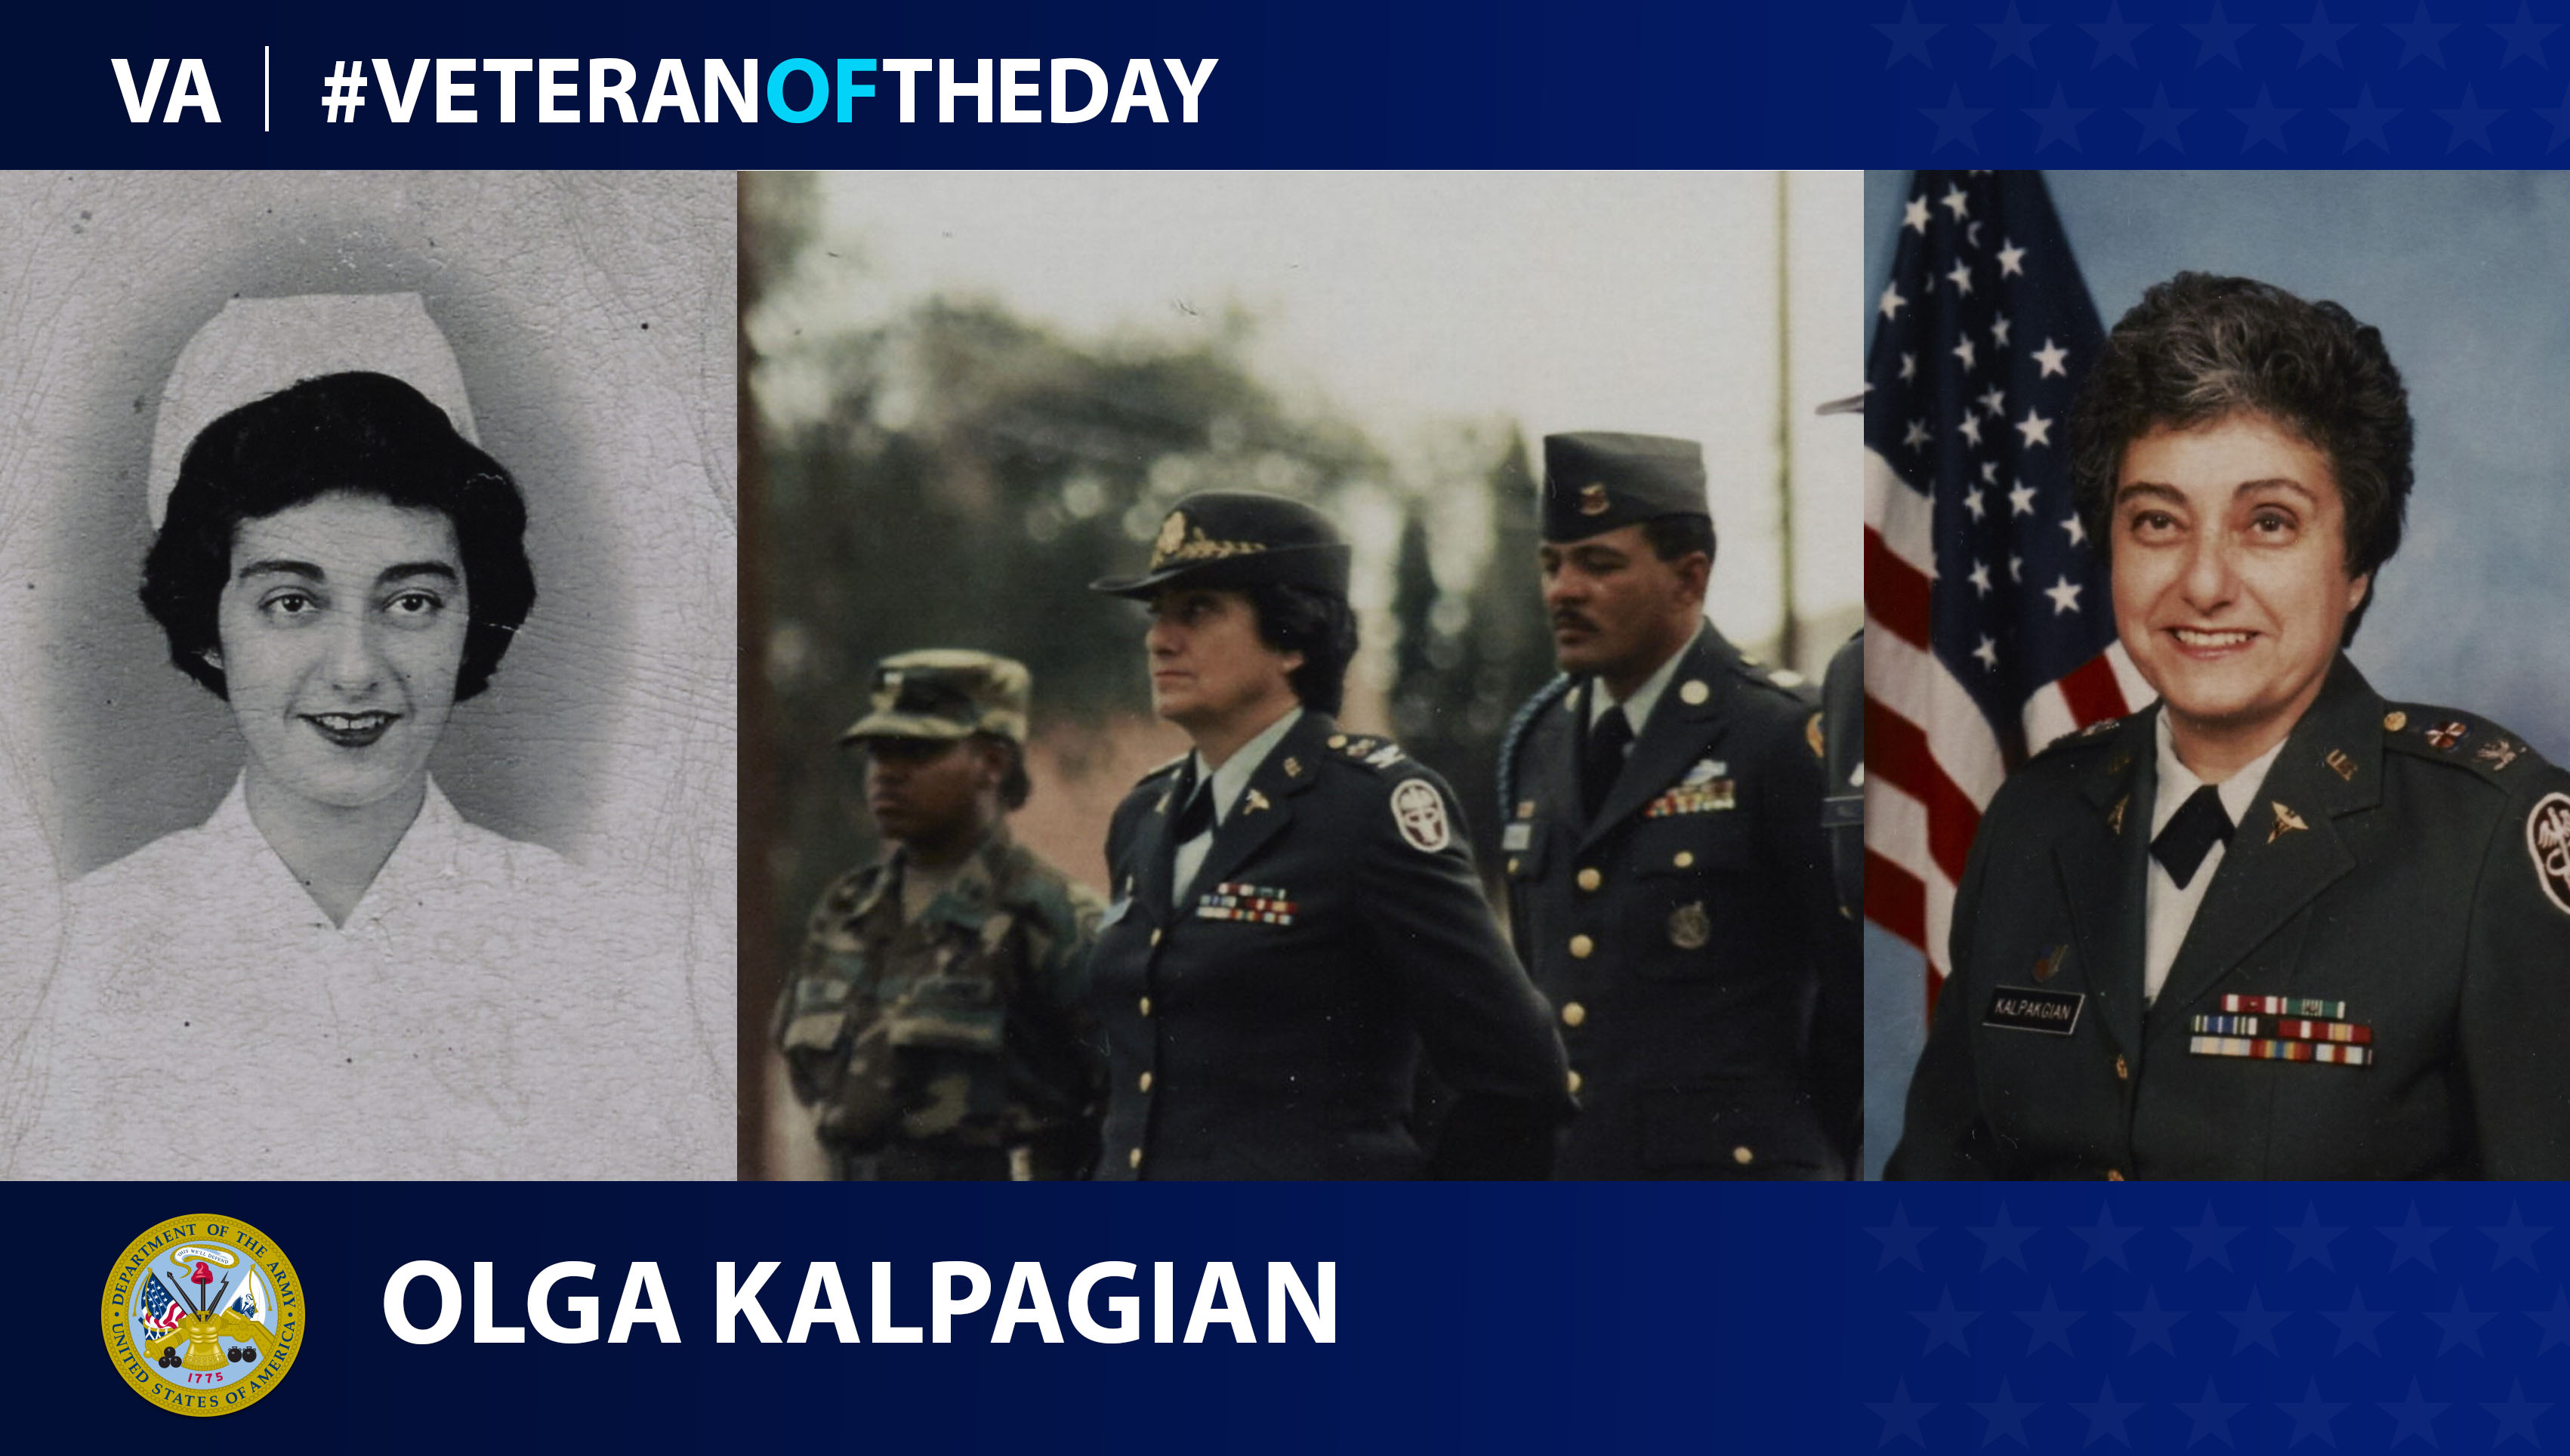 Army Veteran Olga Kalpagian is today's Veteran of the Day.